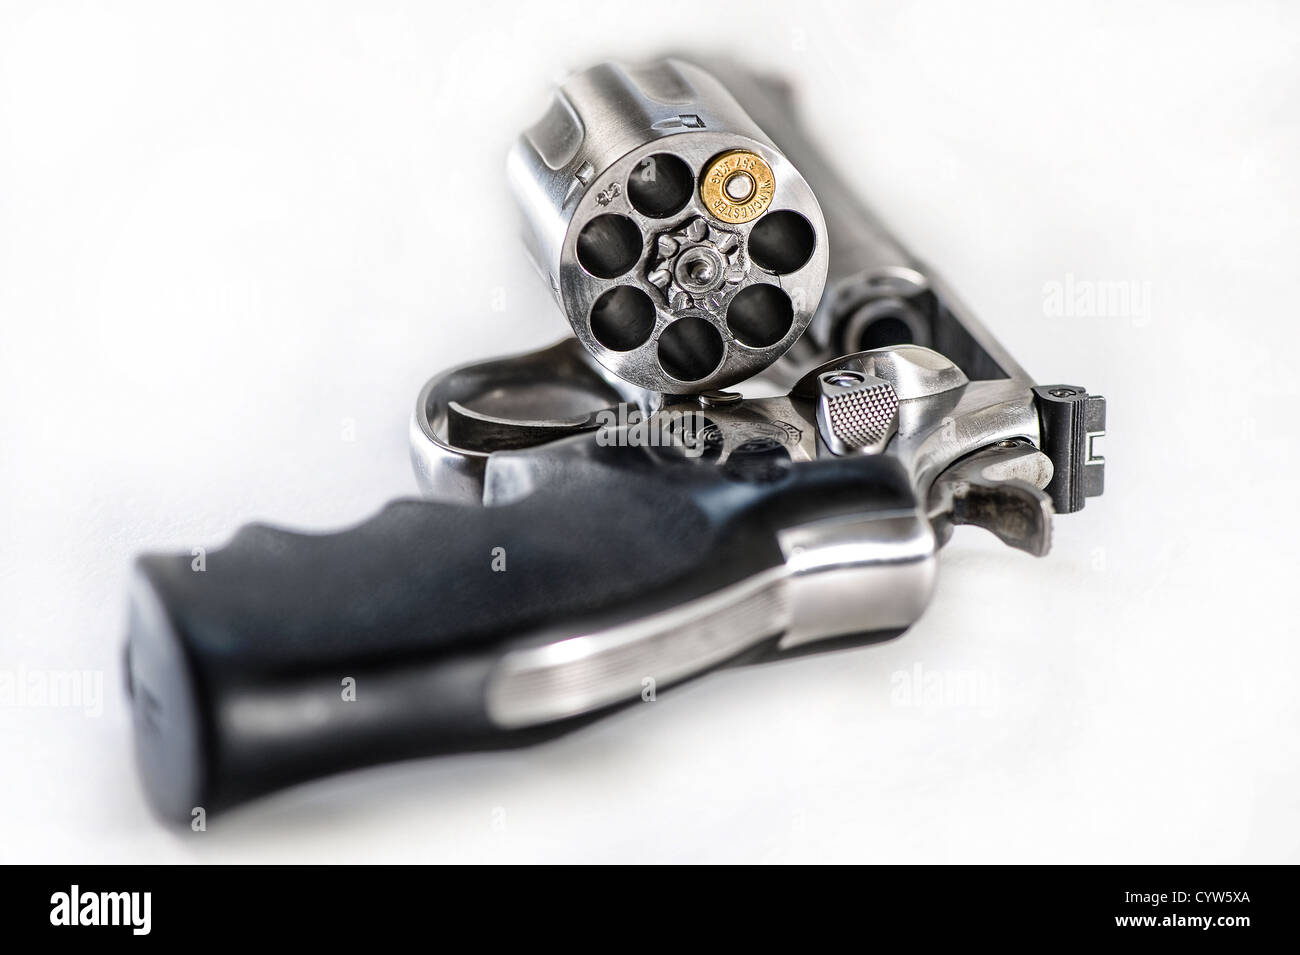 Revolver Smith & Wesson 686 plus Stock Photo